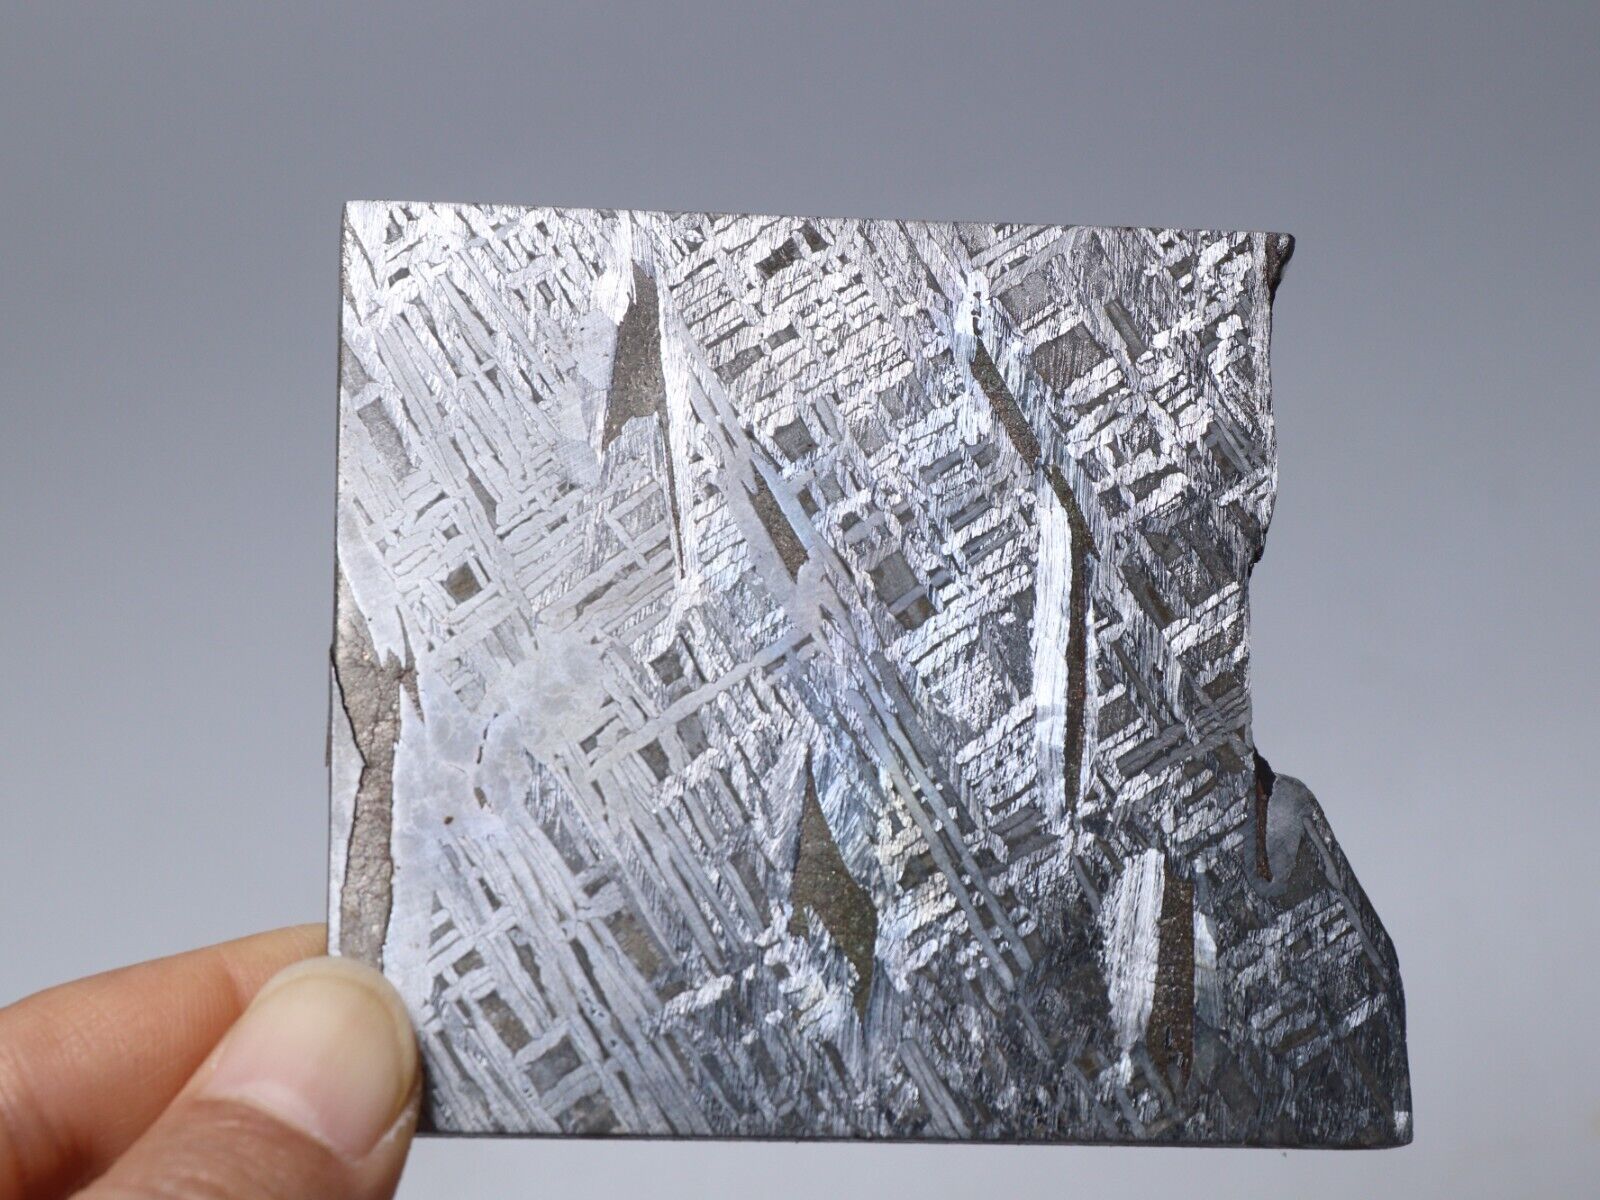 172g Muonionalusta meteorite,Natural meteorite slices,Collectibles,gift N3834